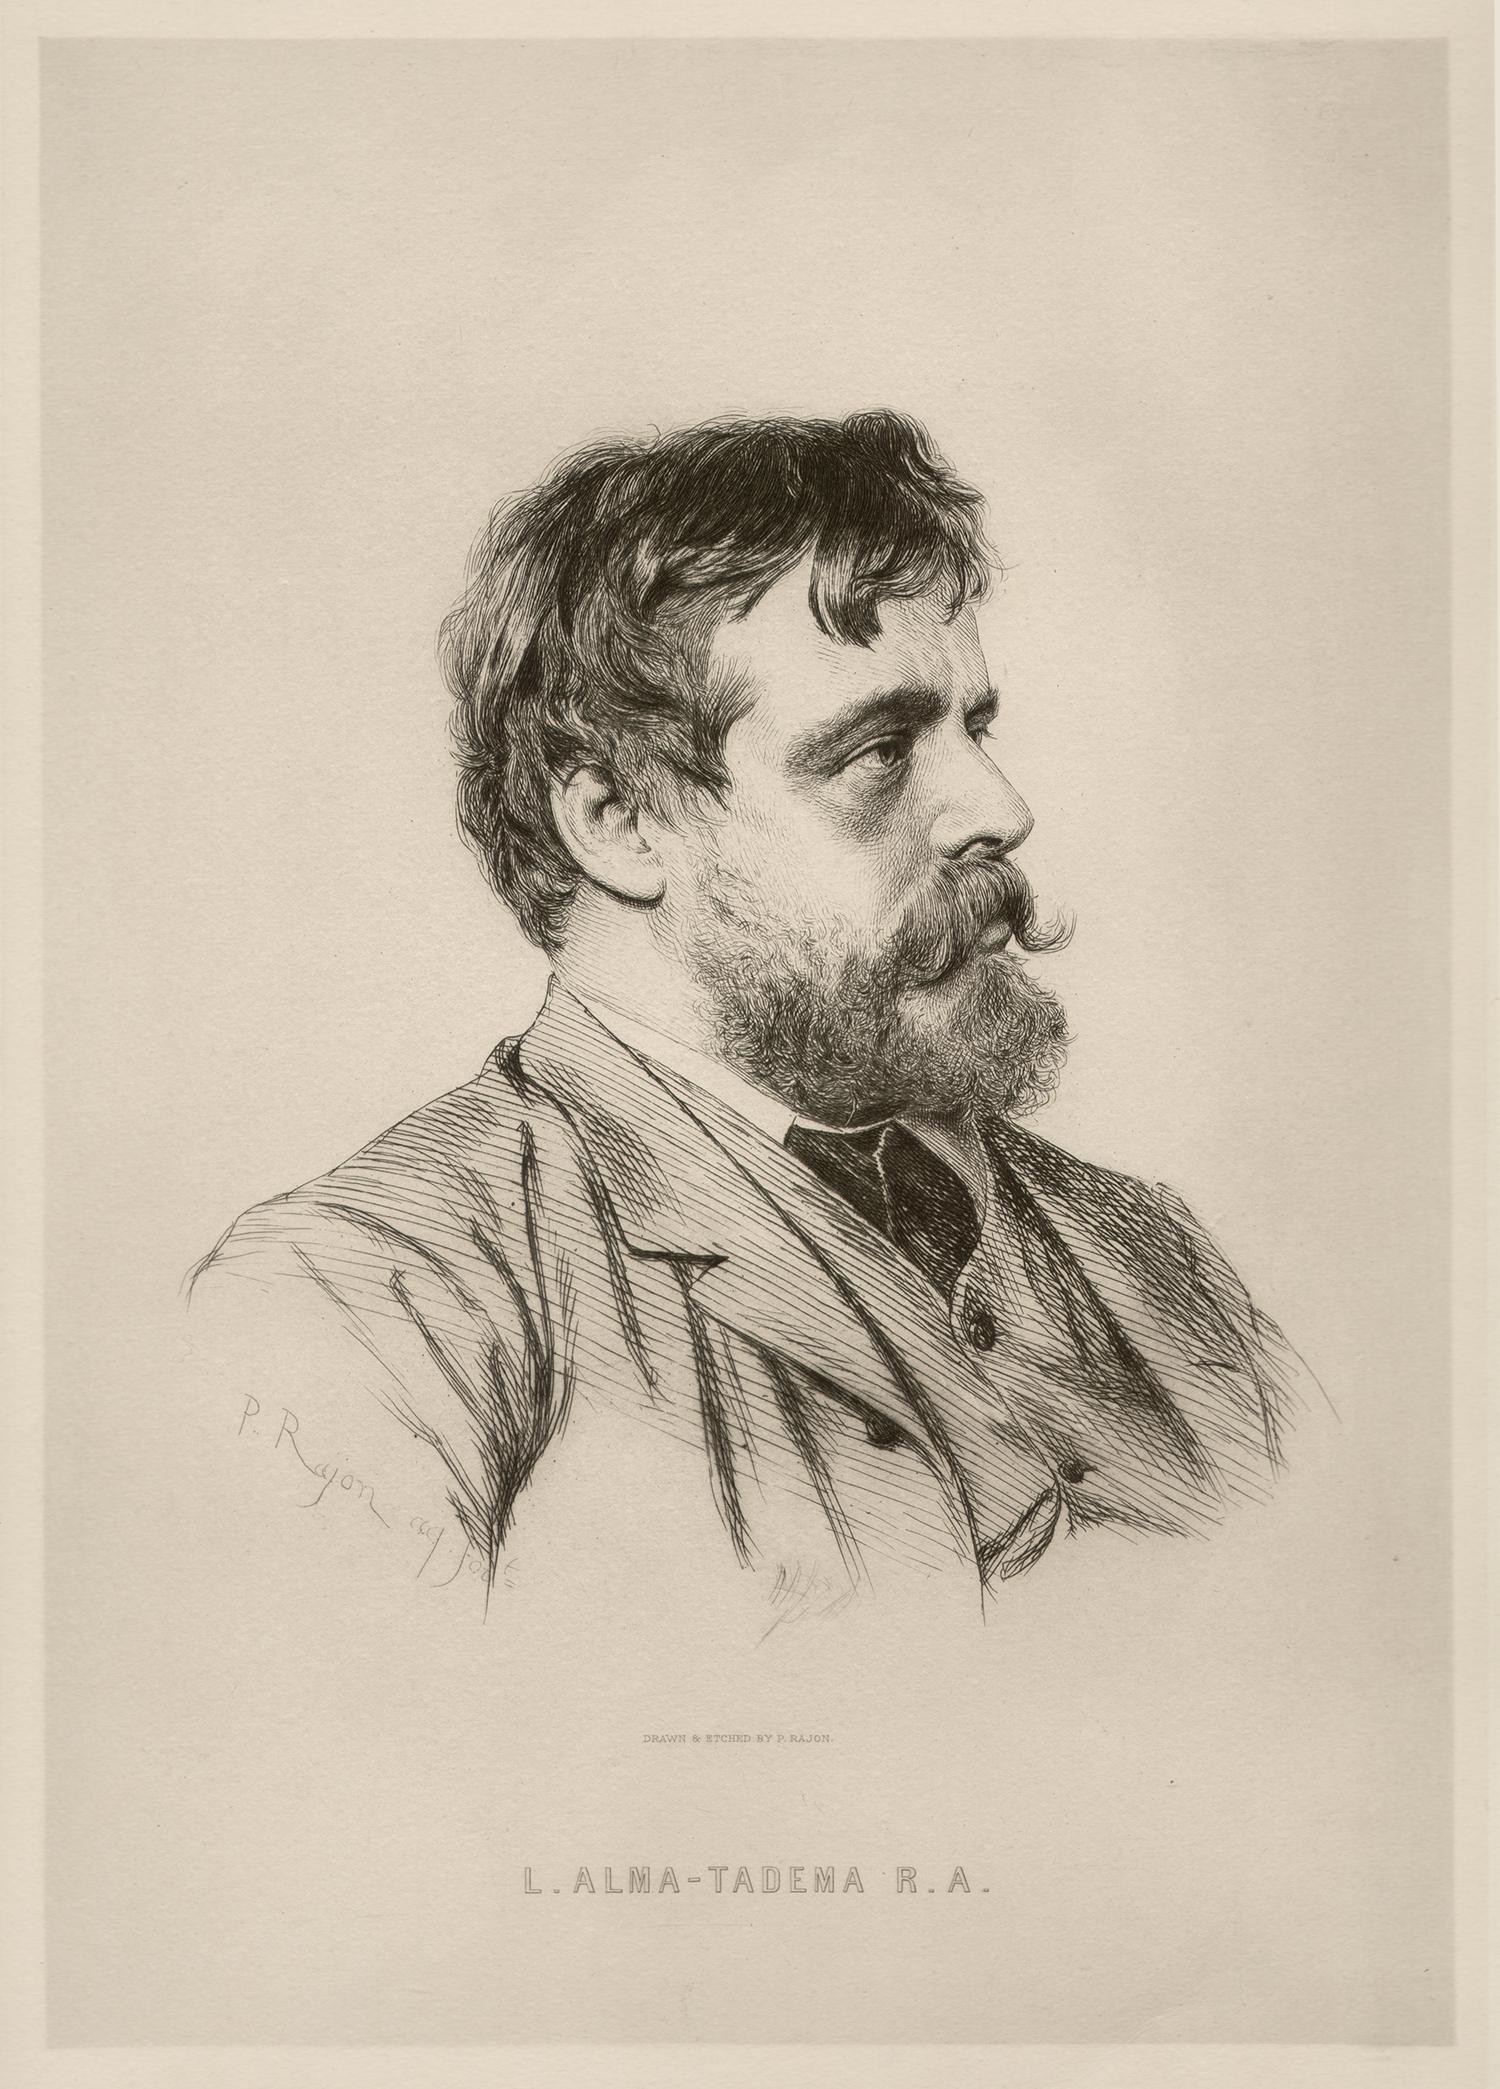 Paul-Adolphe Rajon Portrait Print – Sir Lawrence Alma-Tadema, präraffaelitisch, Porträt-Radierung von Paul Adolphe Rajon